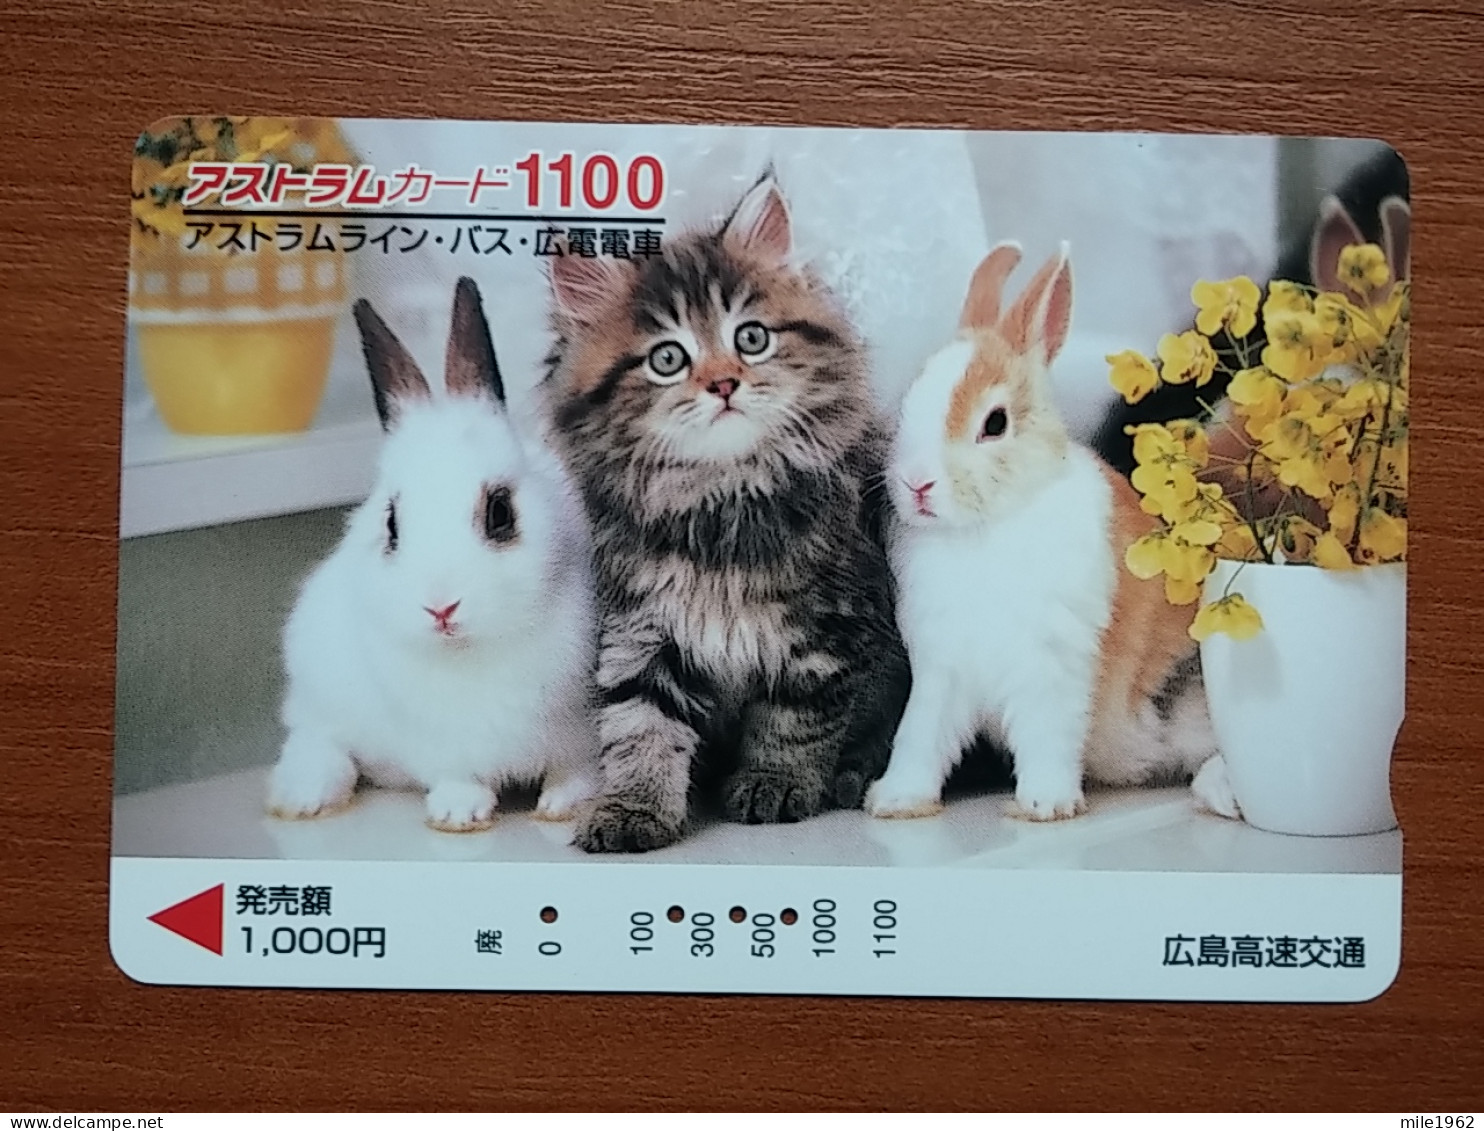 T-430 - JAPAN, Japon, Nipon, Carte Prepayee, Prepaid, Animal, Rabbit, Lapin - Rabbits